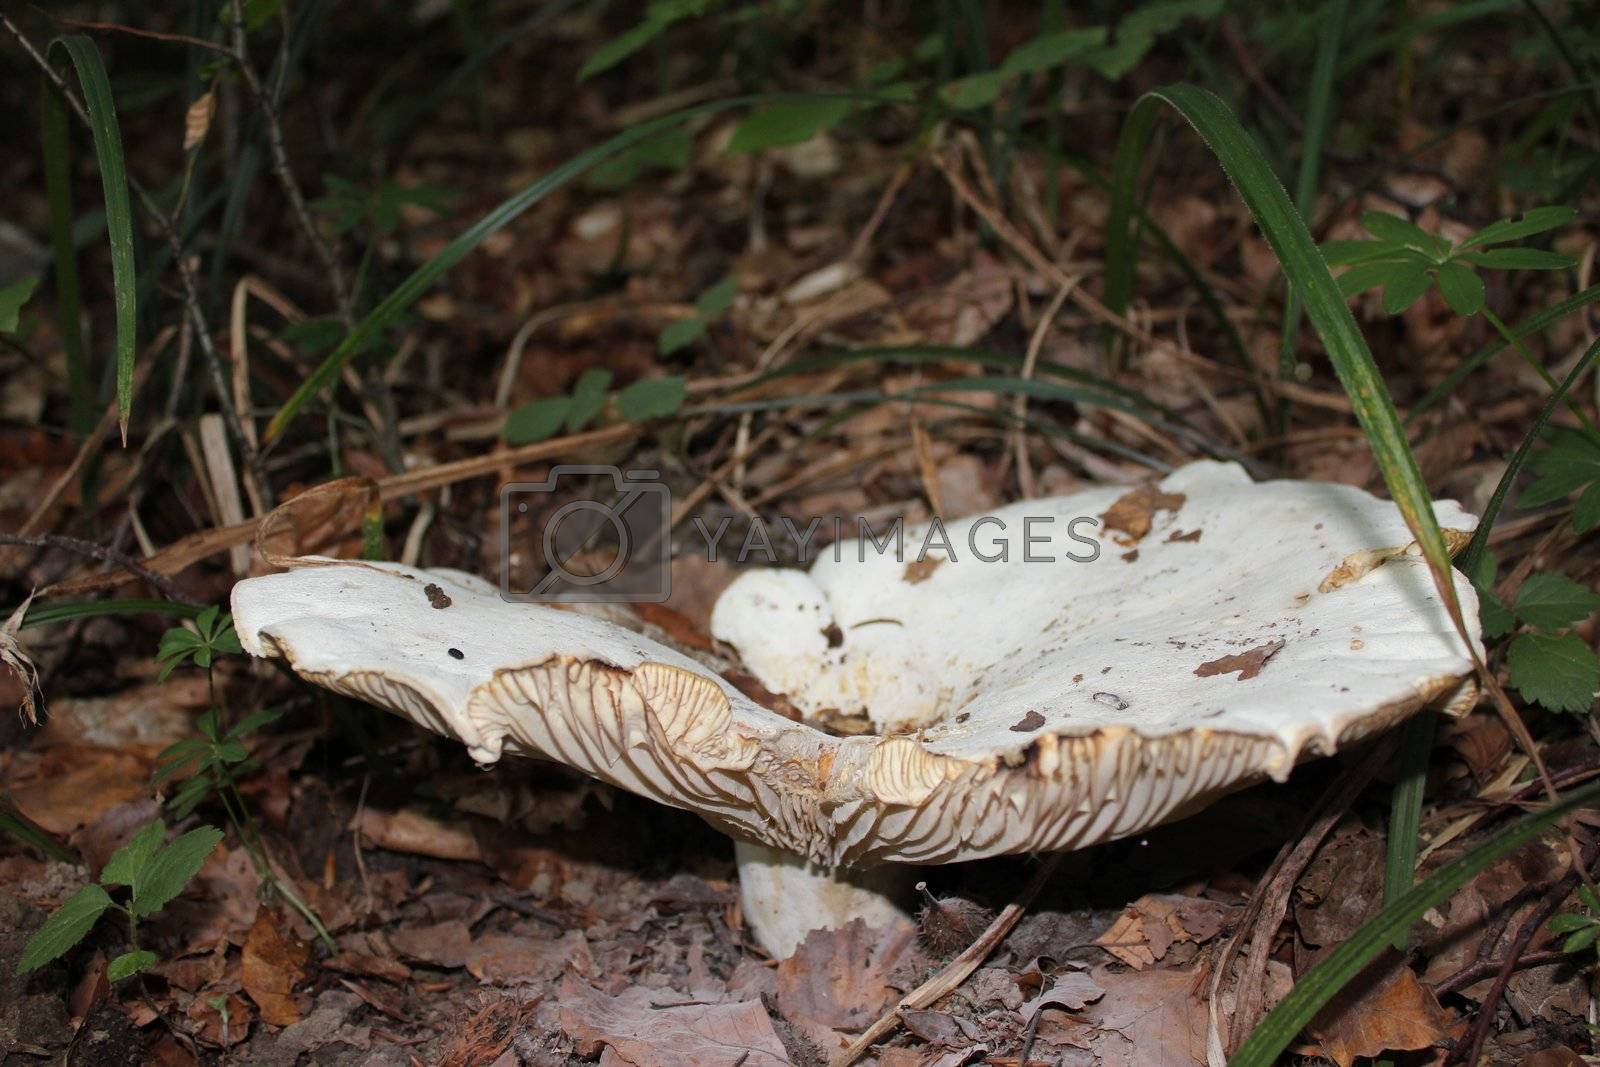 Royalty free image of mushroom by mariephotos